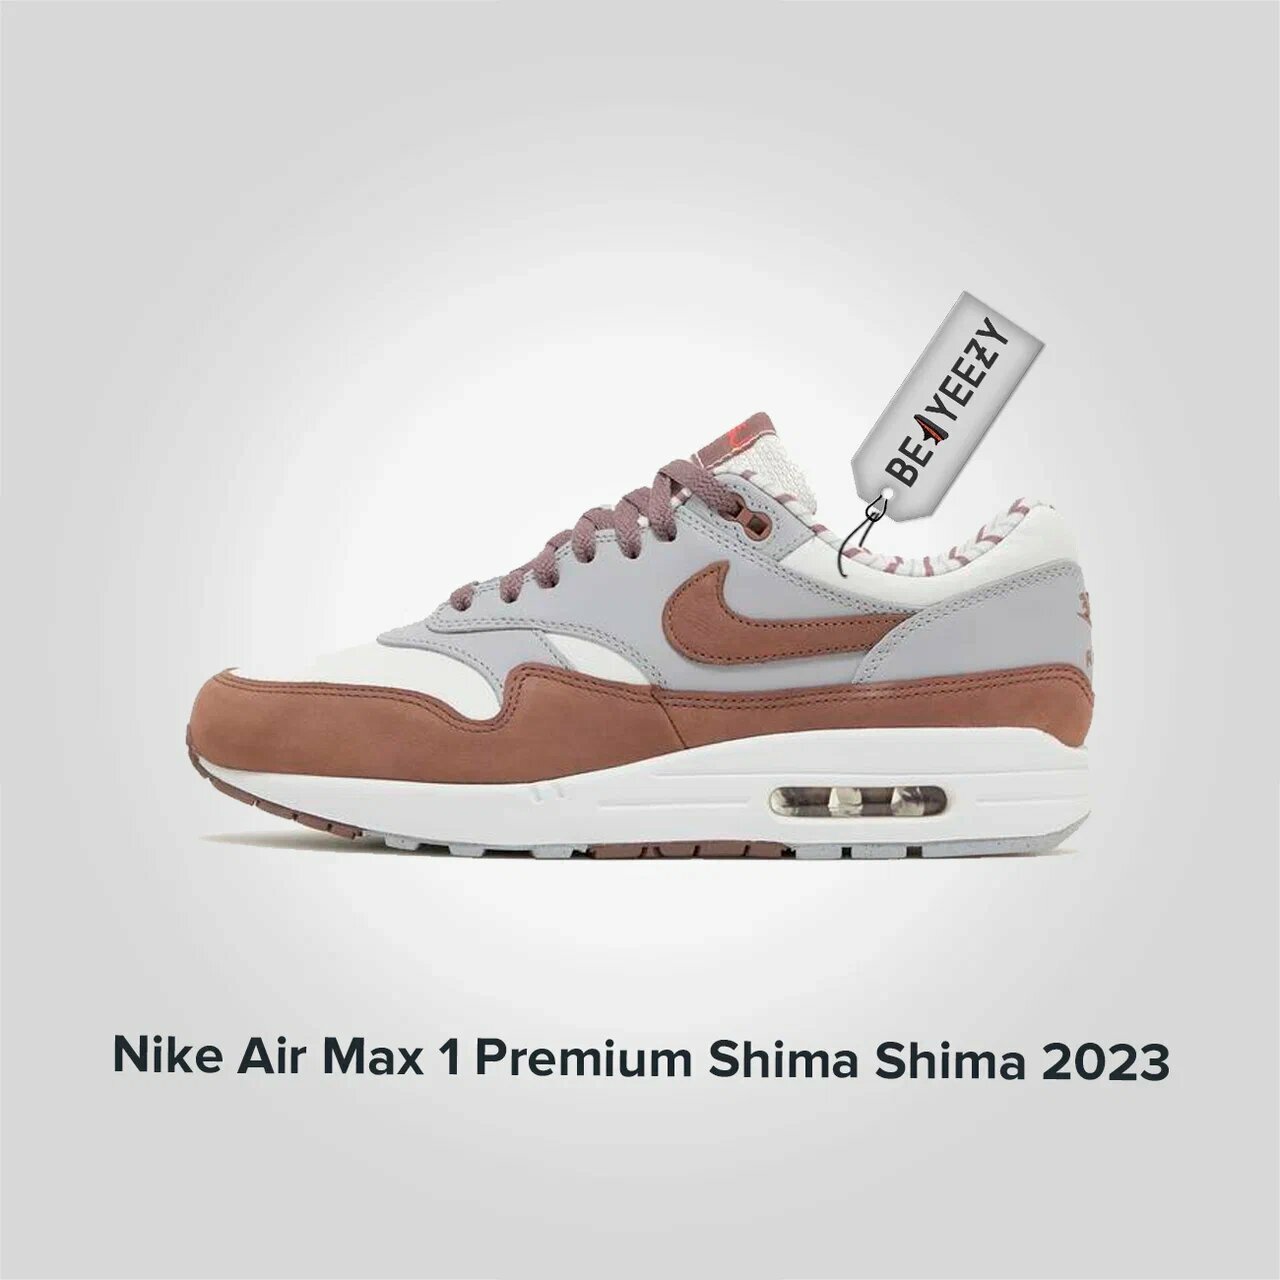 Nike Air Max 1 Premium Shima Shima 2023